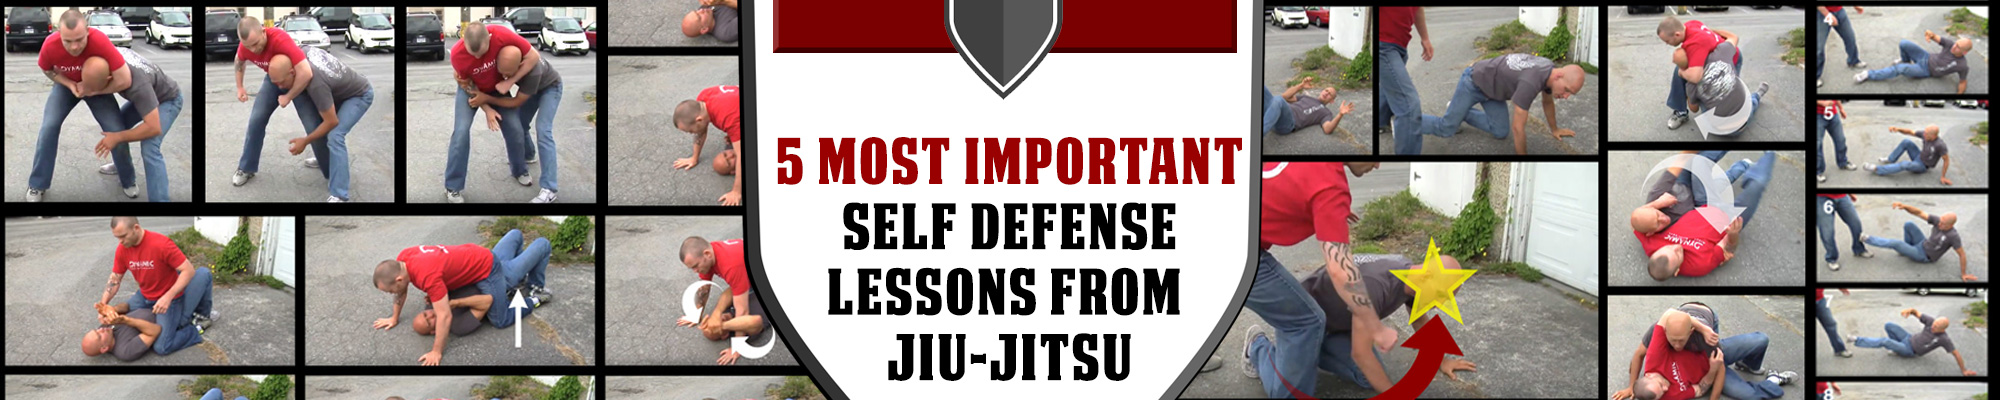 5-most-important-Jiu-Jitsu-Lessons-for-self-defense-tutorials-banner